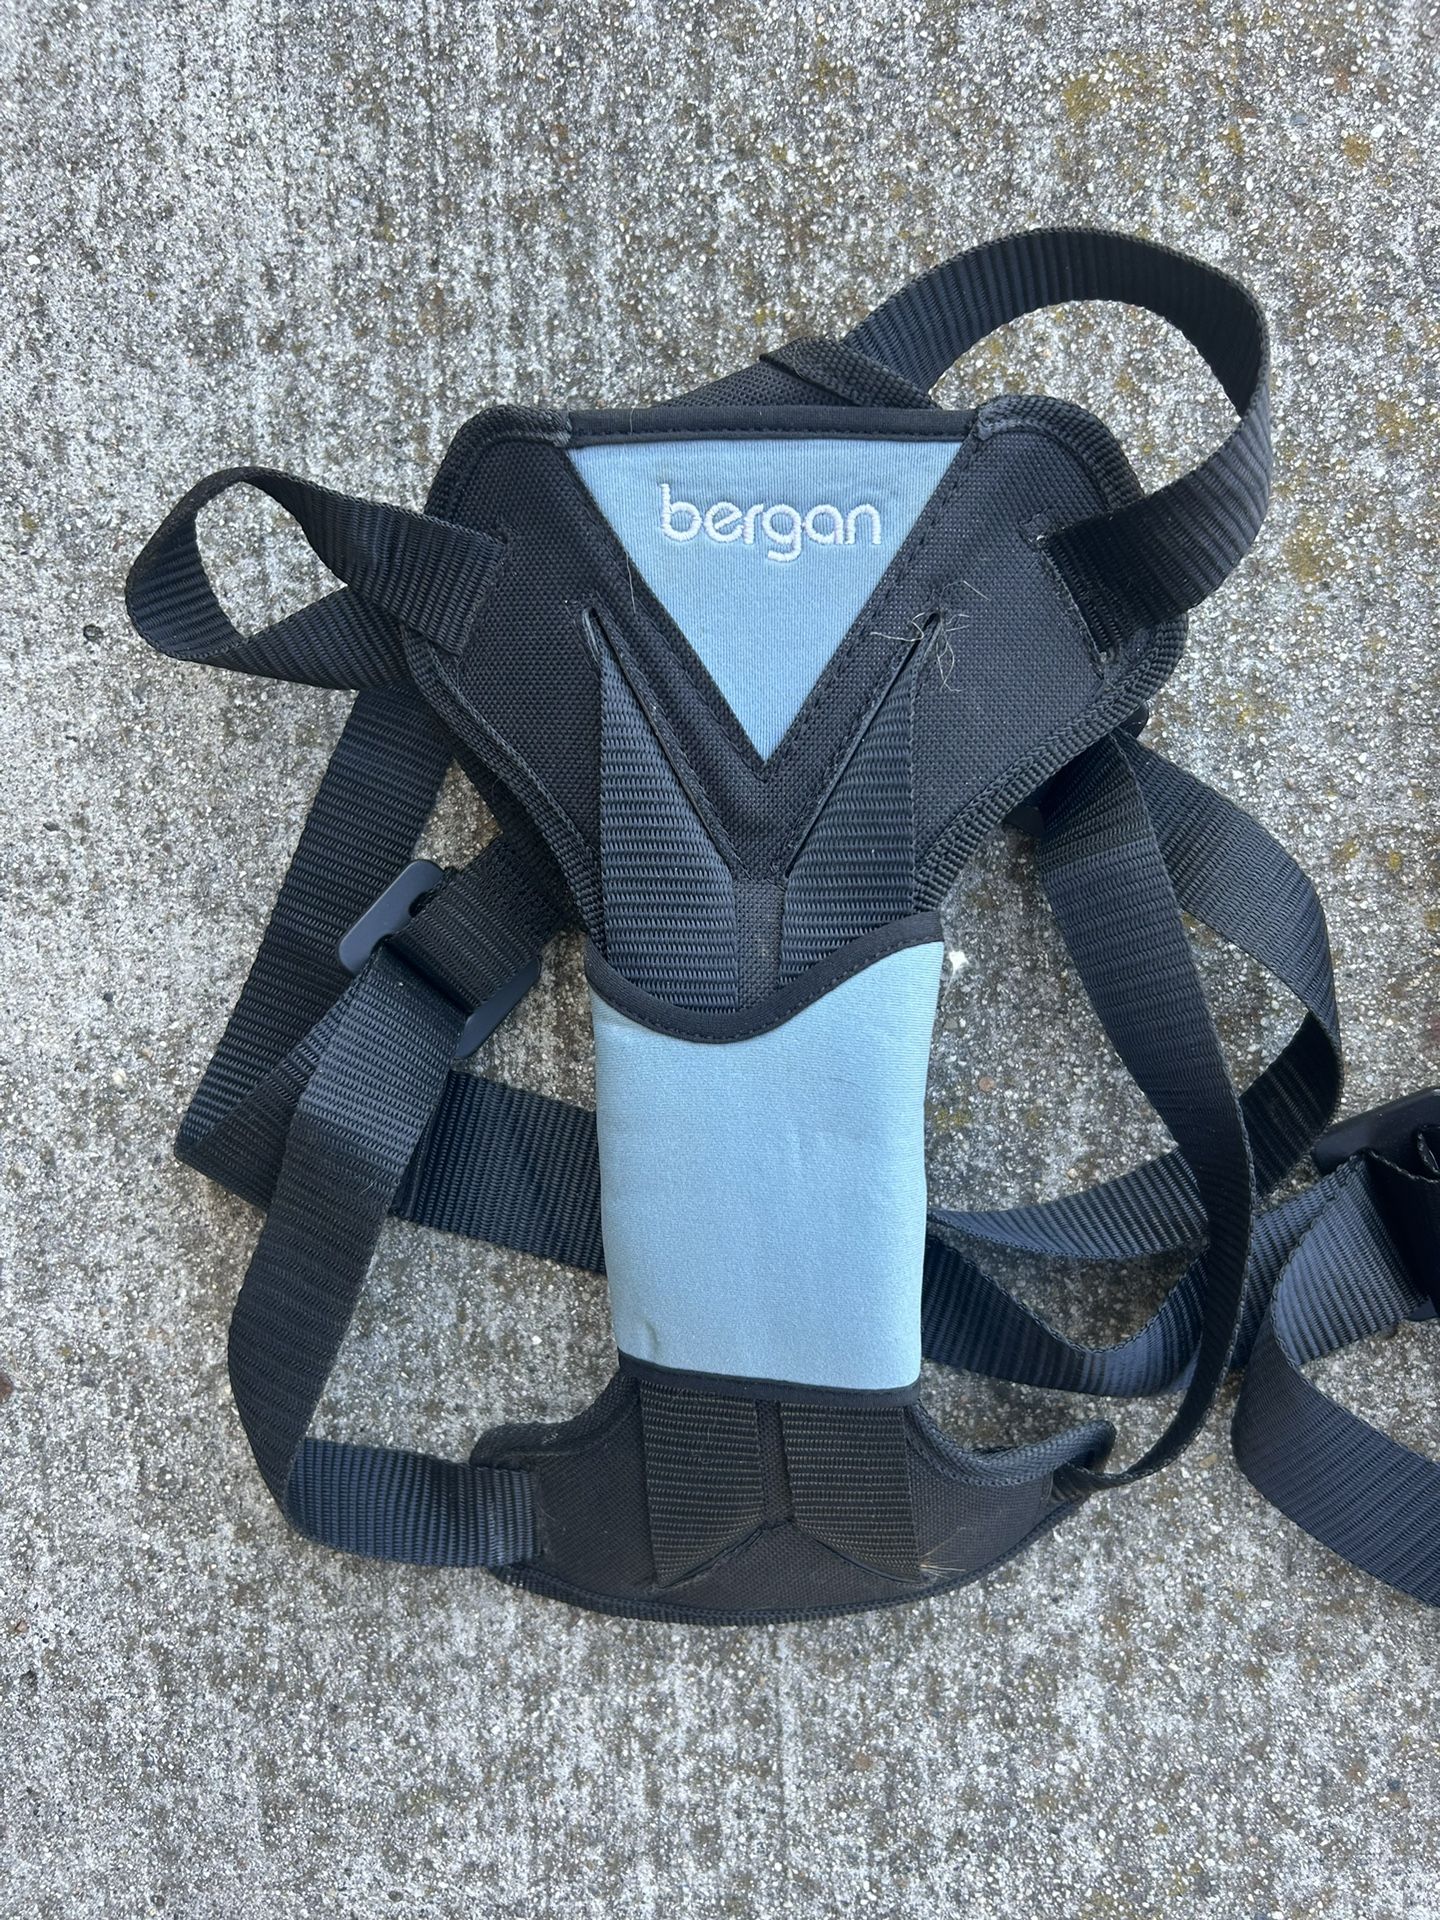 Bergan dog Seatbelt System-two Sizes- Pet Safety